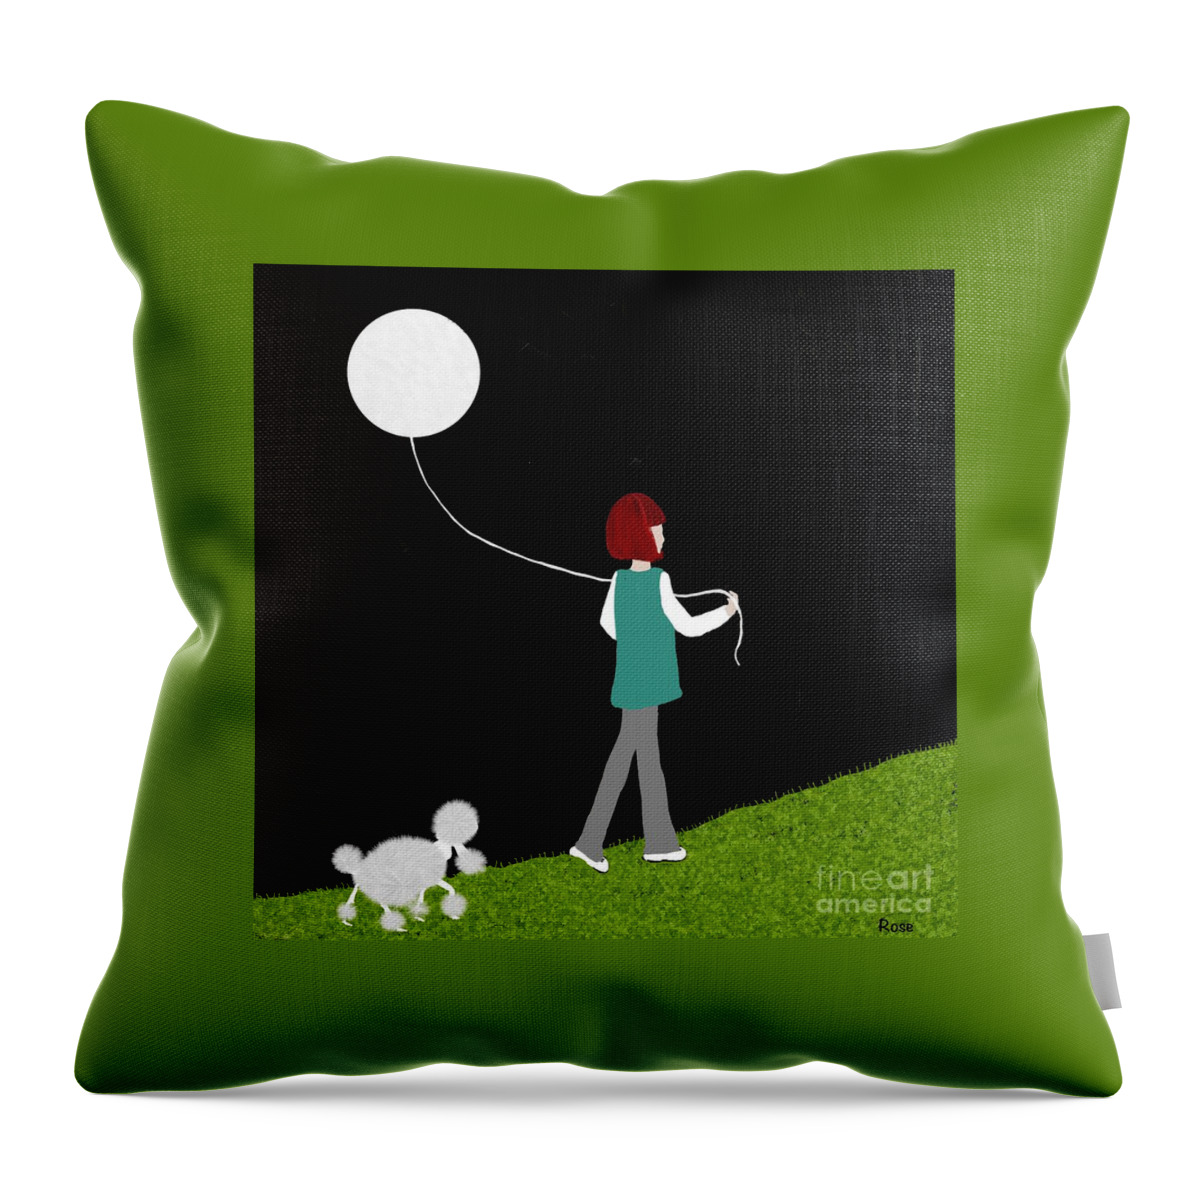 Moon Art Throw Pillow featuring the digital art Moon on a string art by Elaine Hayward